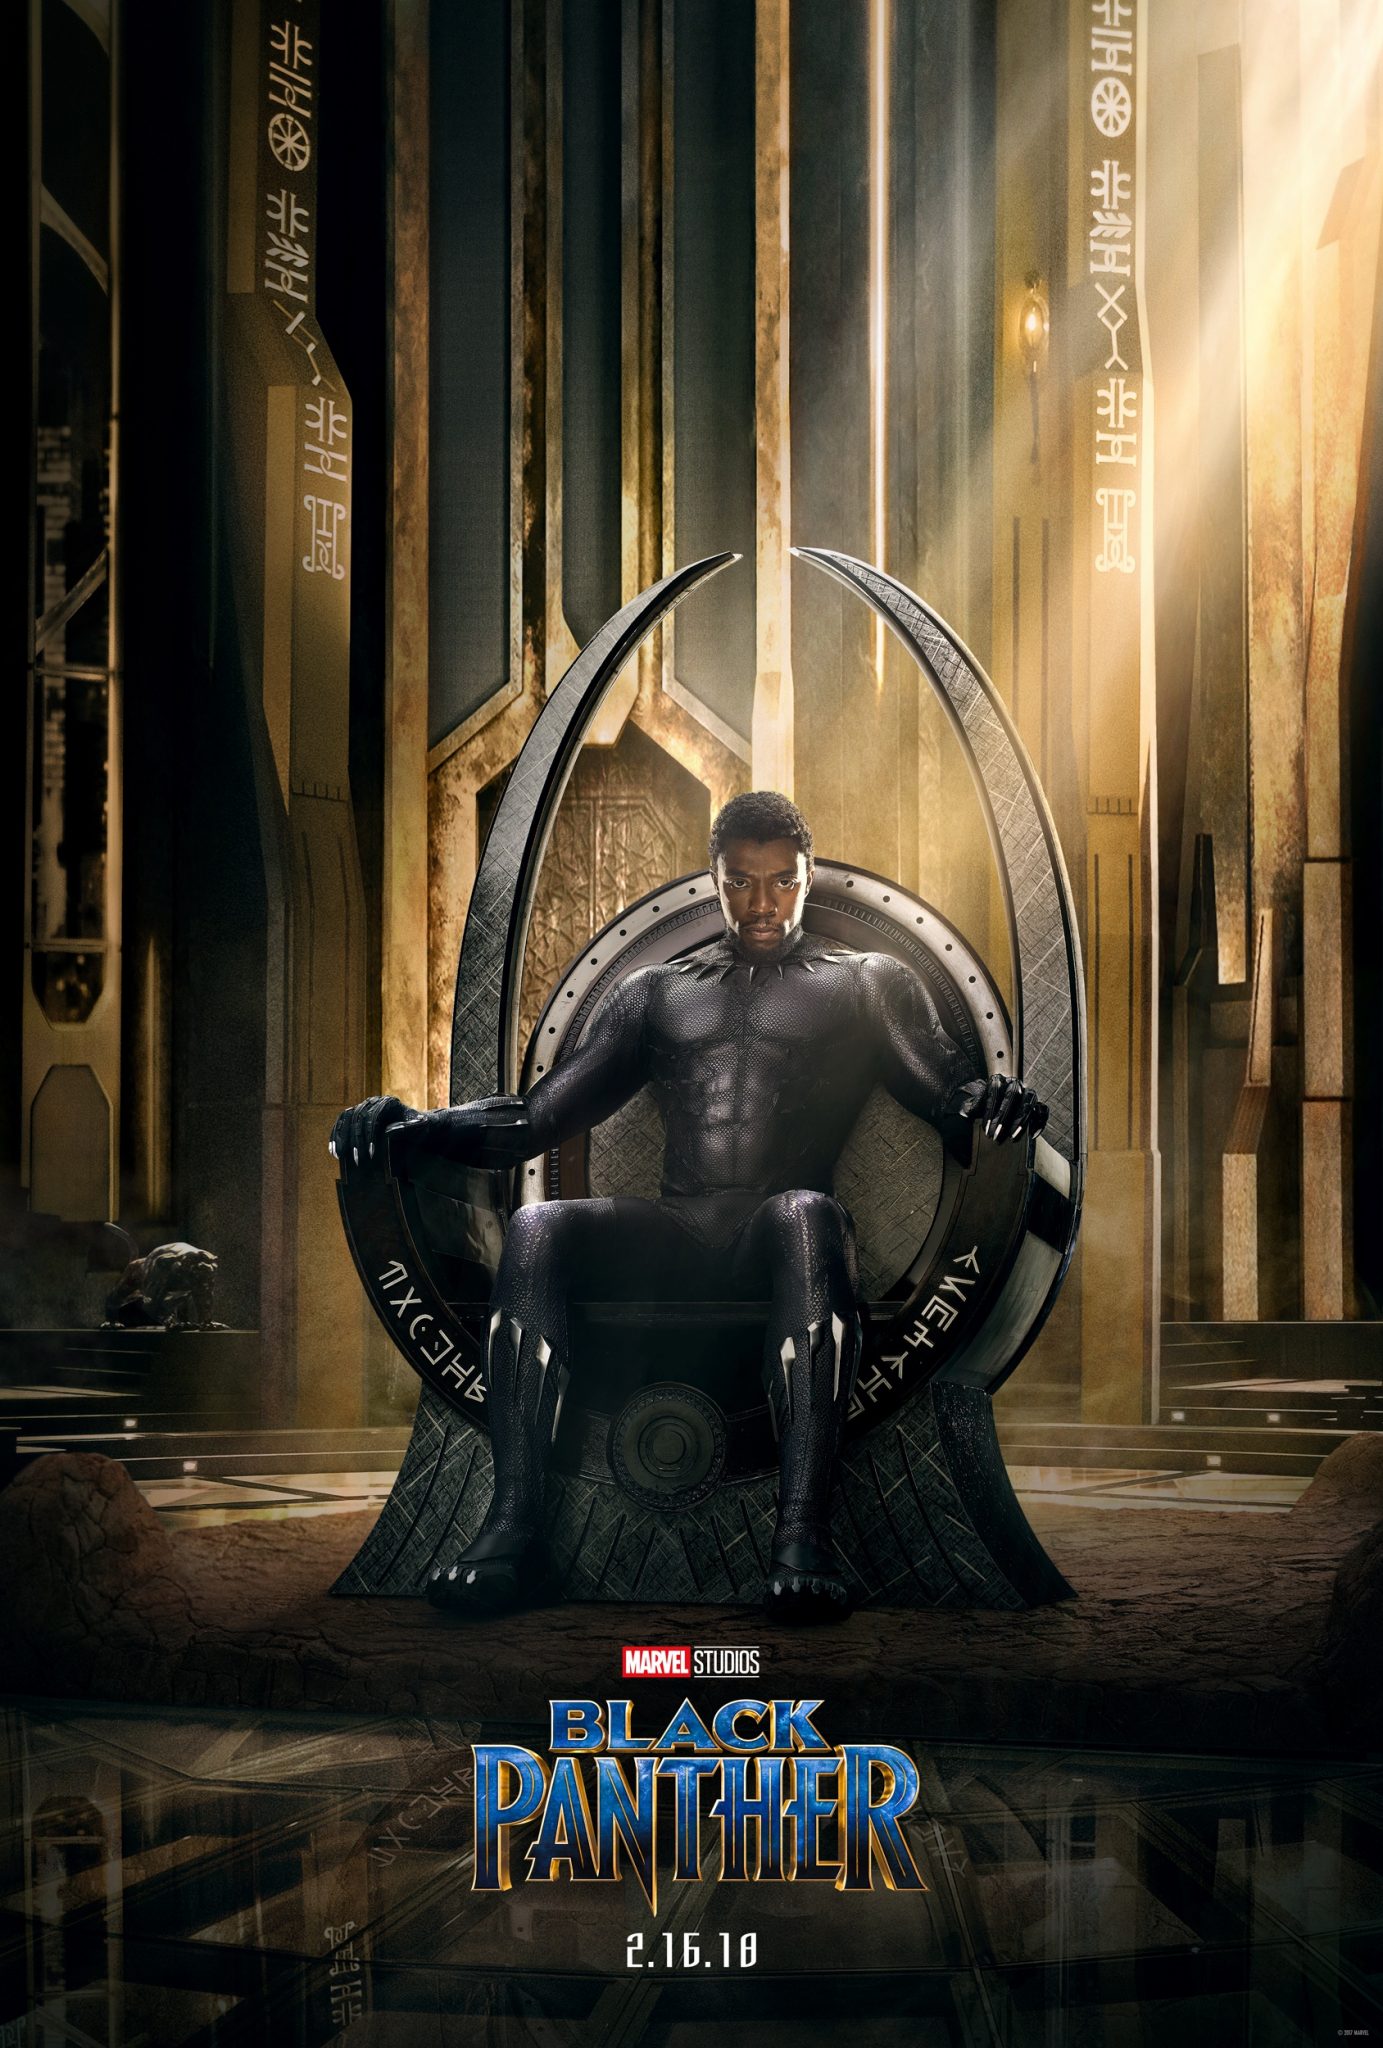 Marvel Studios’ BLACK PANTHER – Teaser Poster Here! Tune In Tonight For Teaser Trailer!